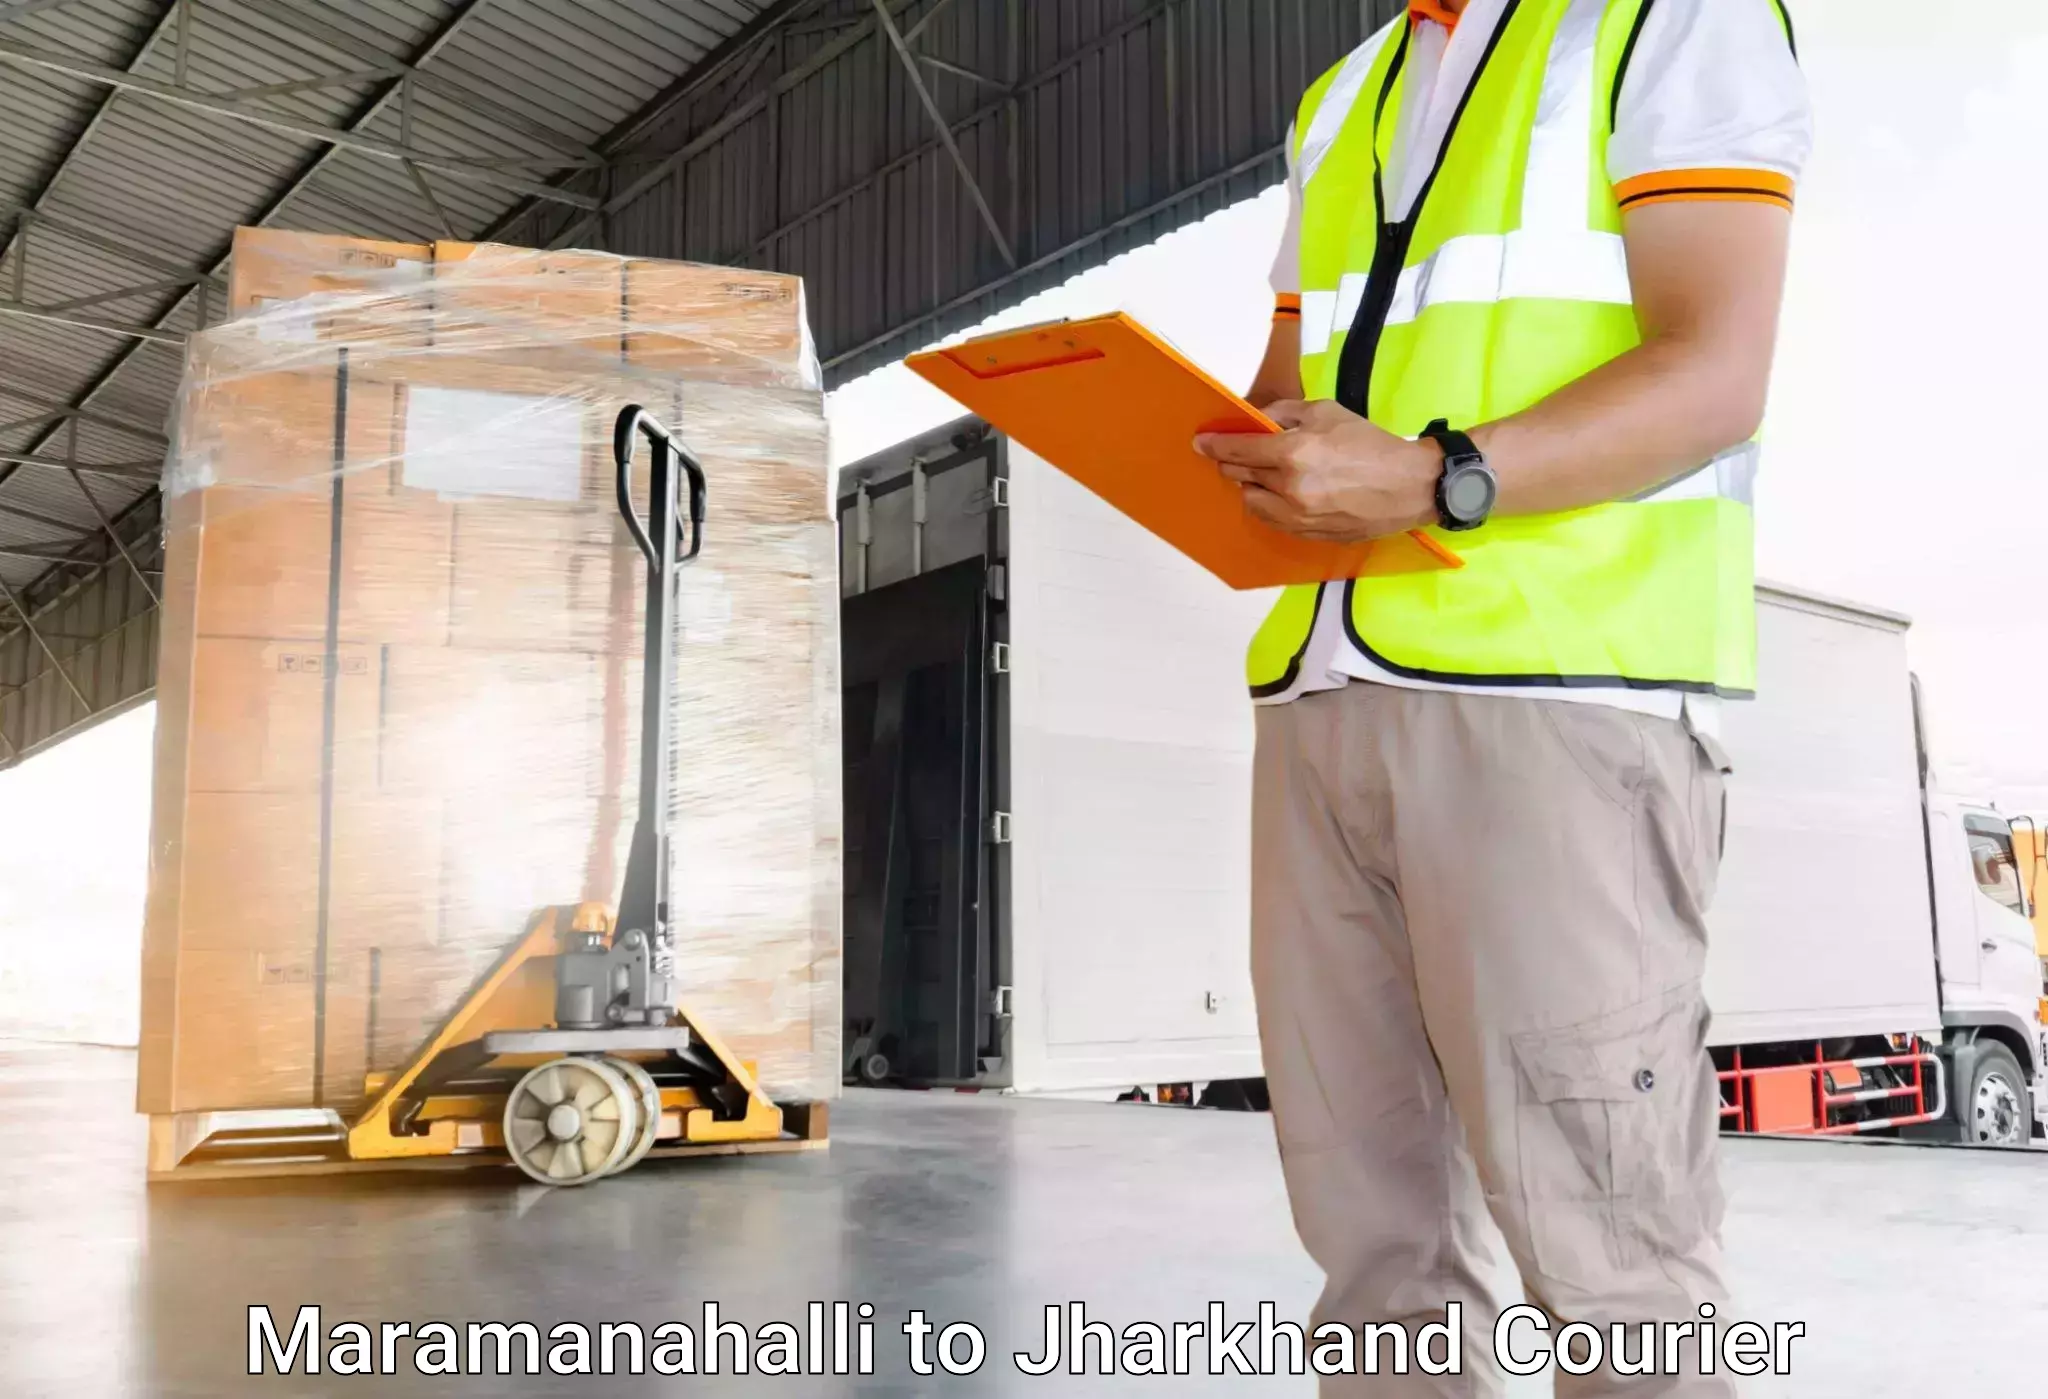 Baggage delivery technology Maramanahalli to Satbarwa